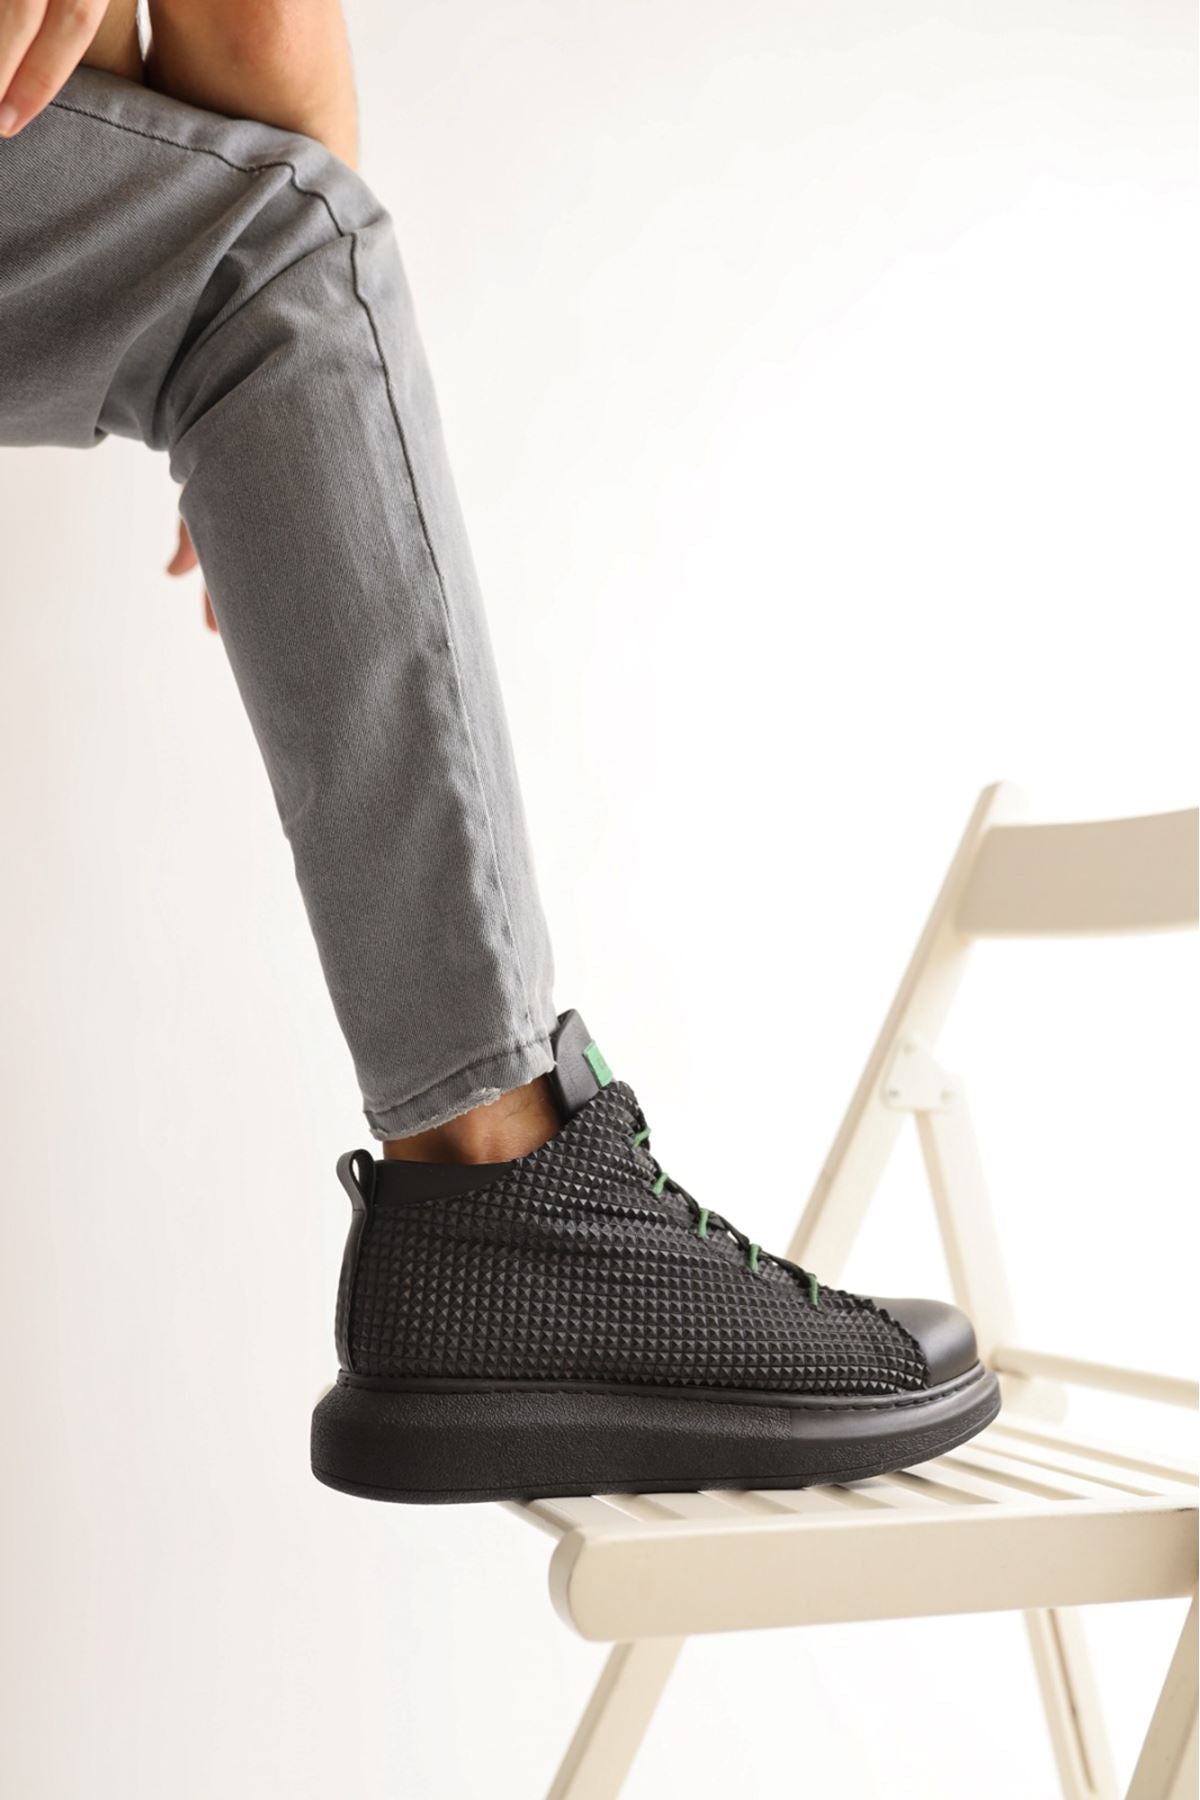 CH 111 Garni ST BLACK / GREEN men's sneakers shoes - STREETMODE™